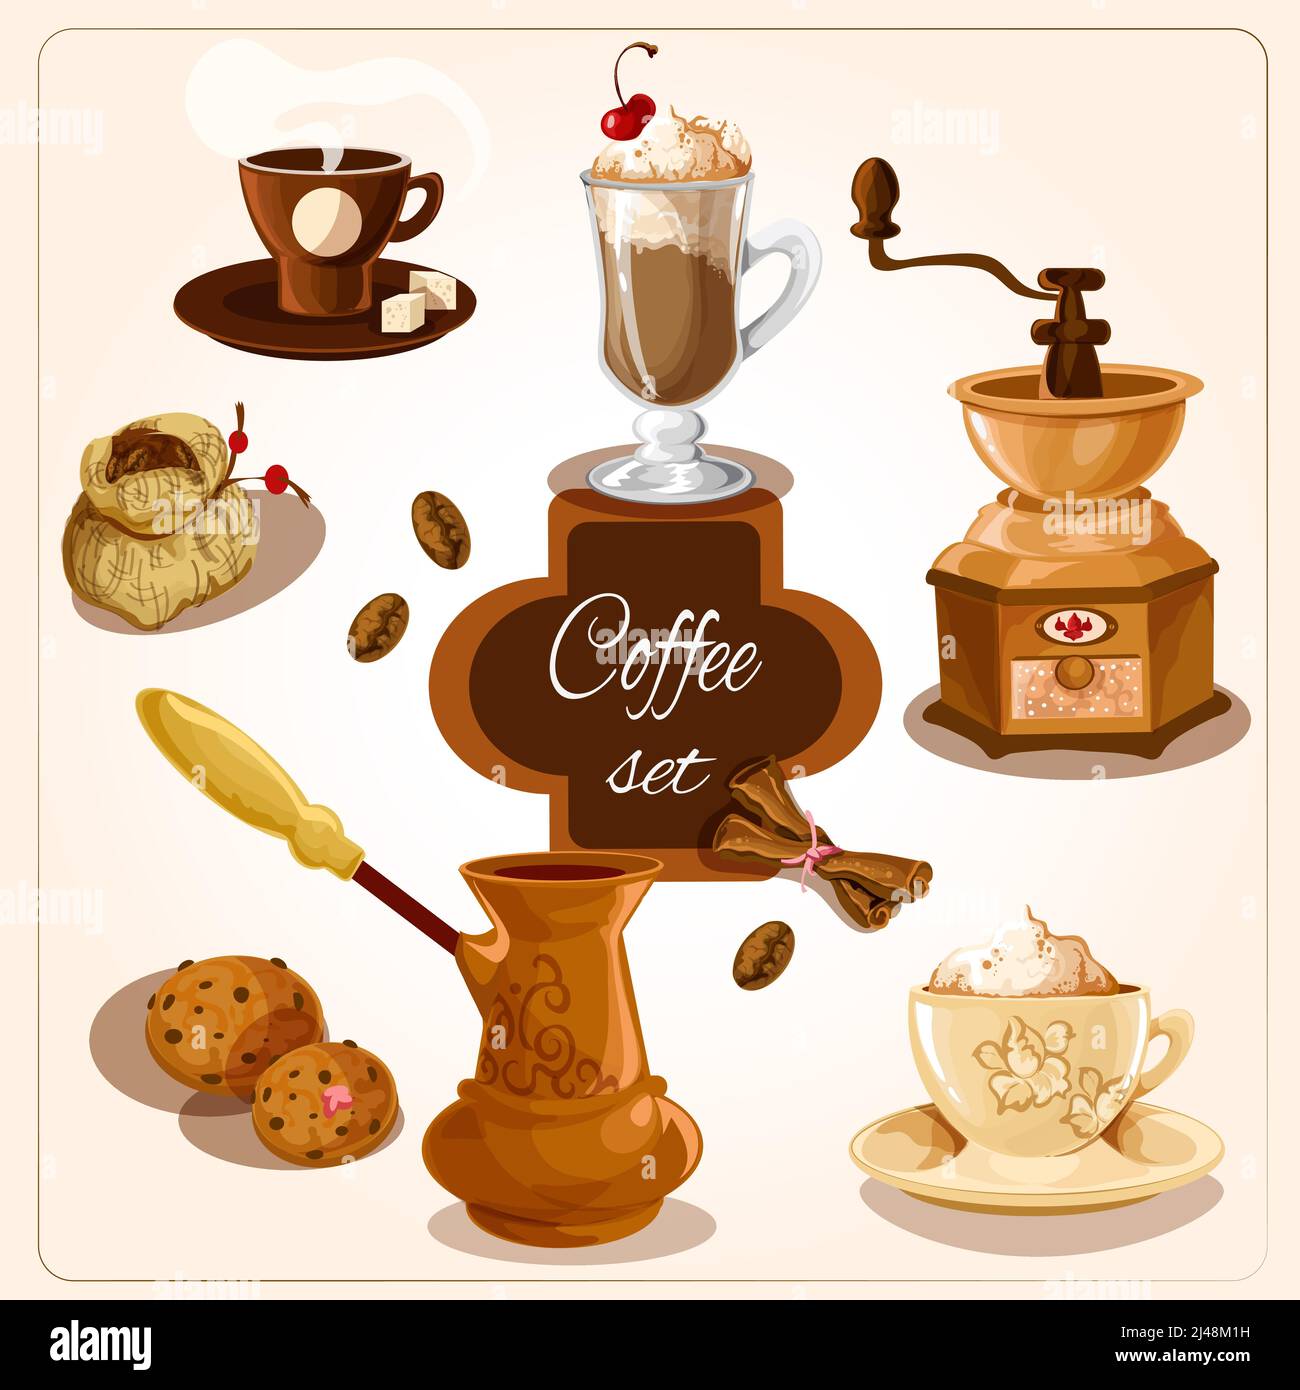 Sugar in jar, illustration, vector on white background Stock Vector Image &  Art - Alamy